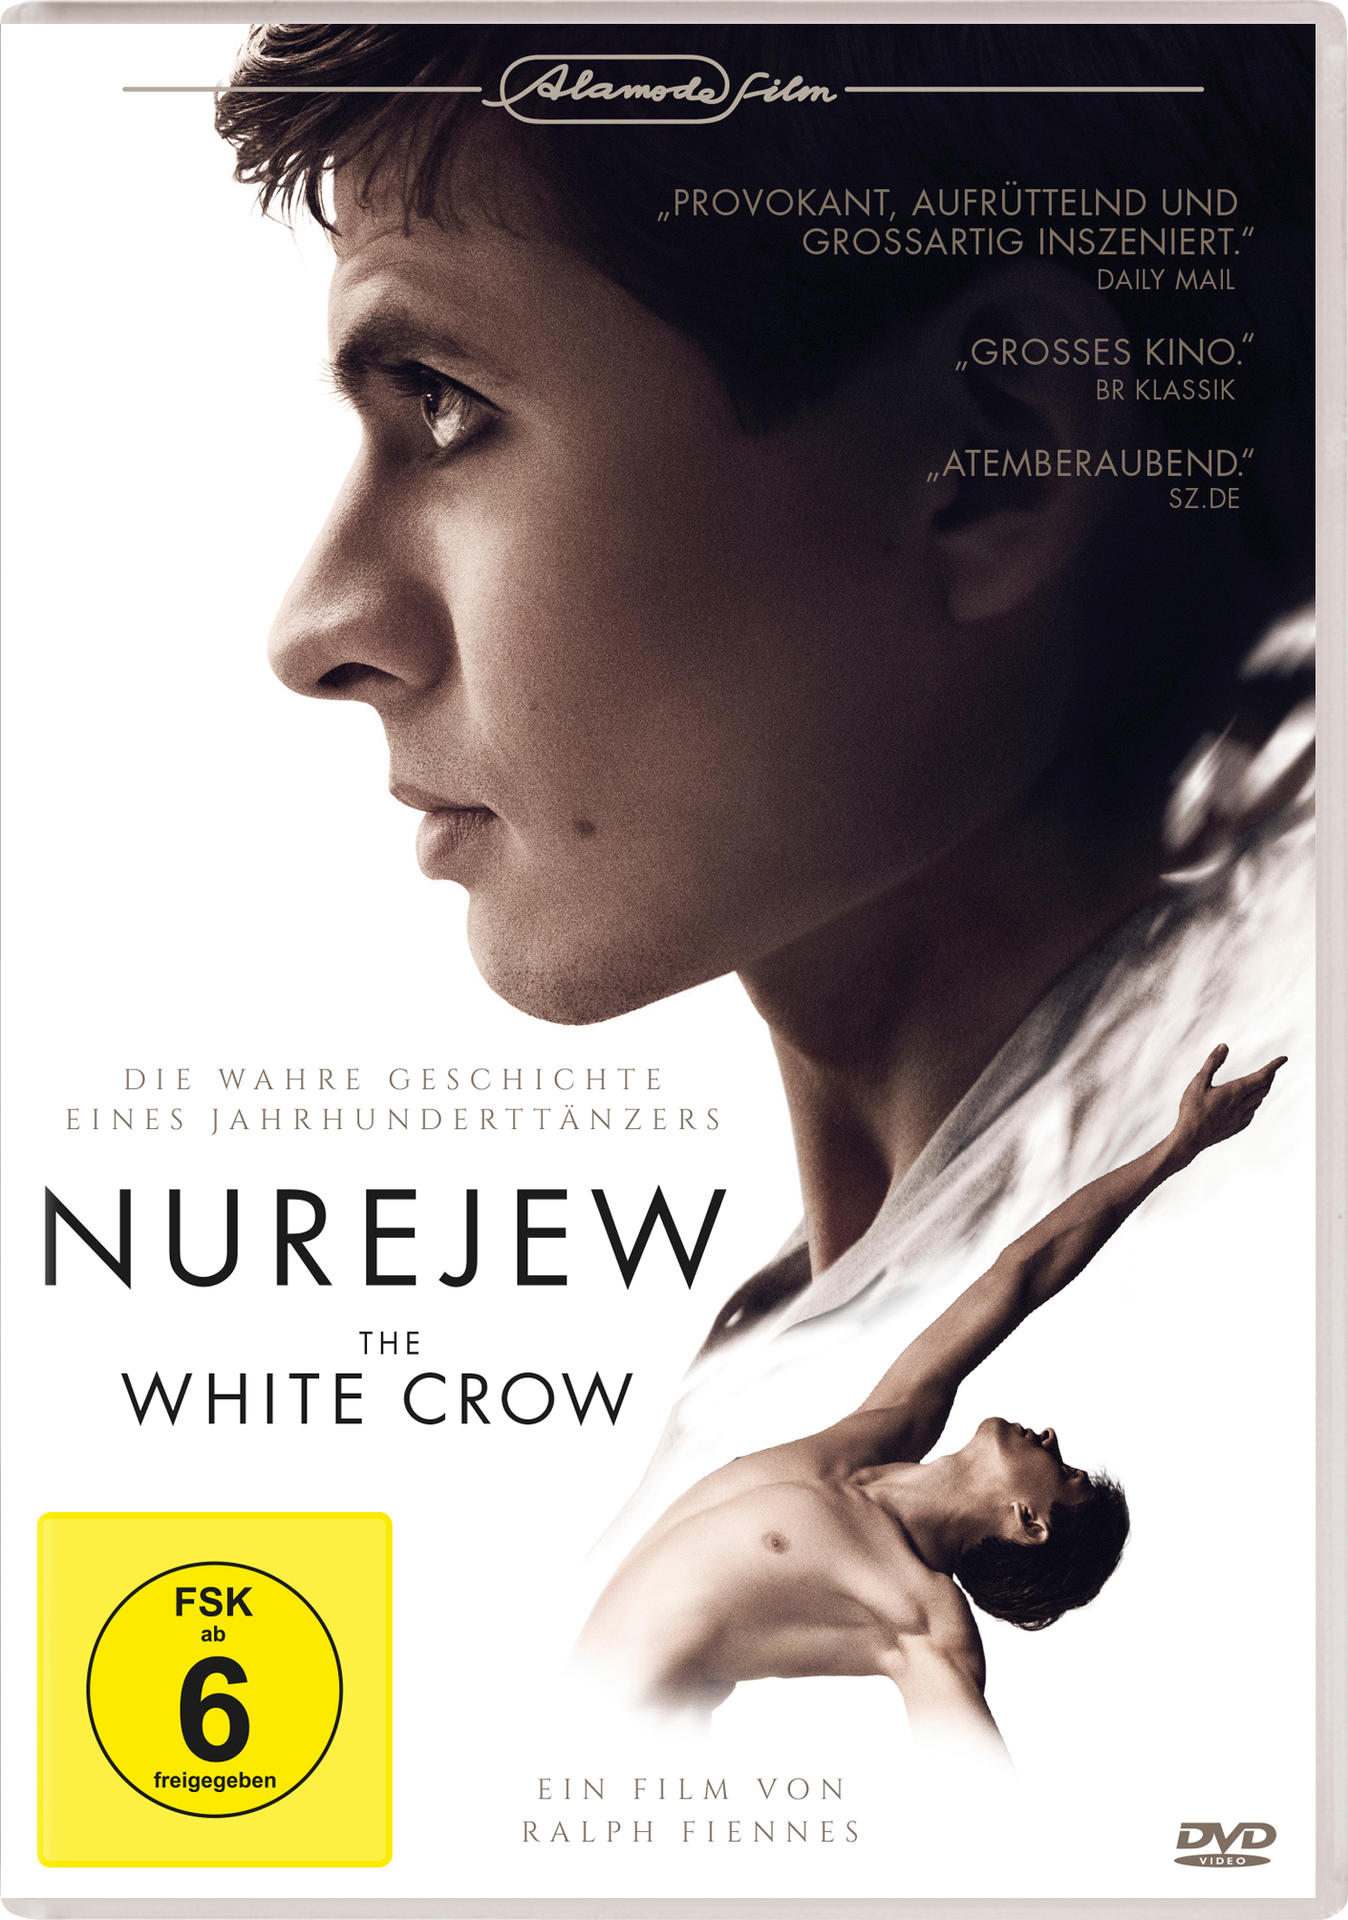 Nurejew - The Crow White DVD